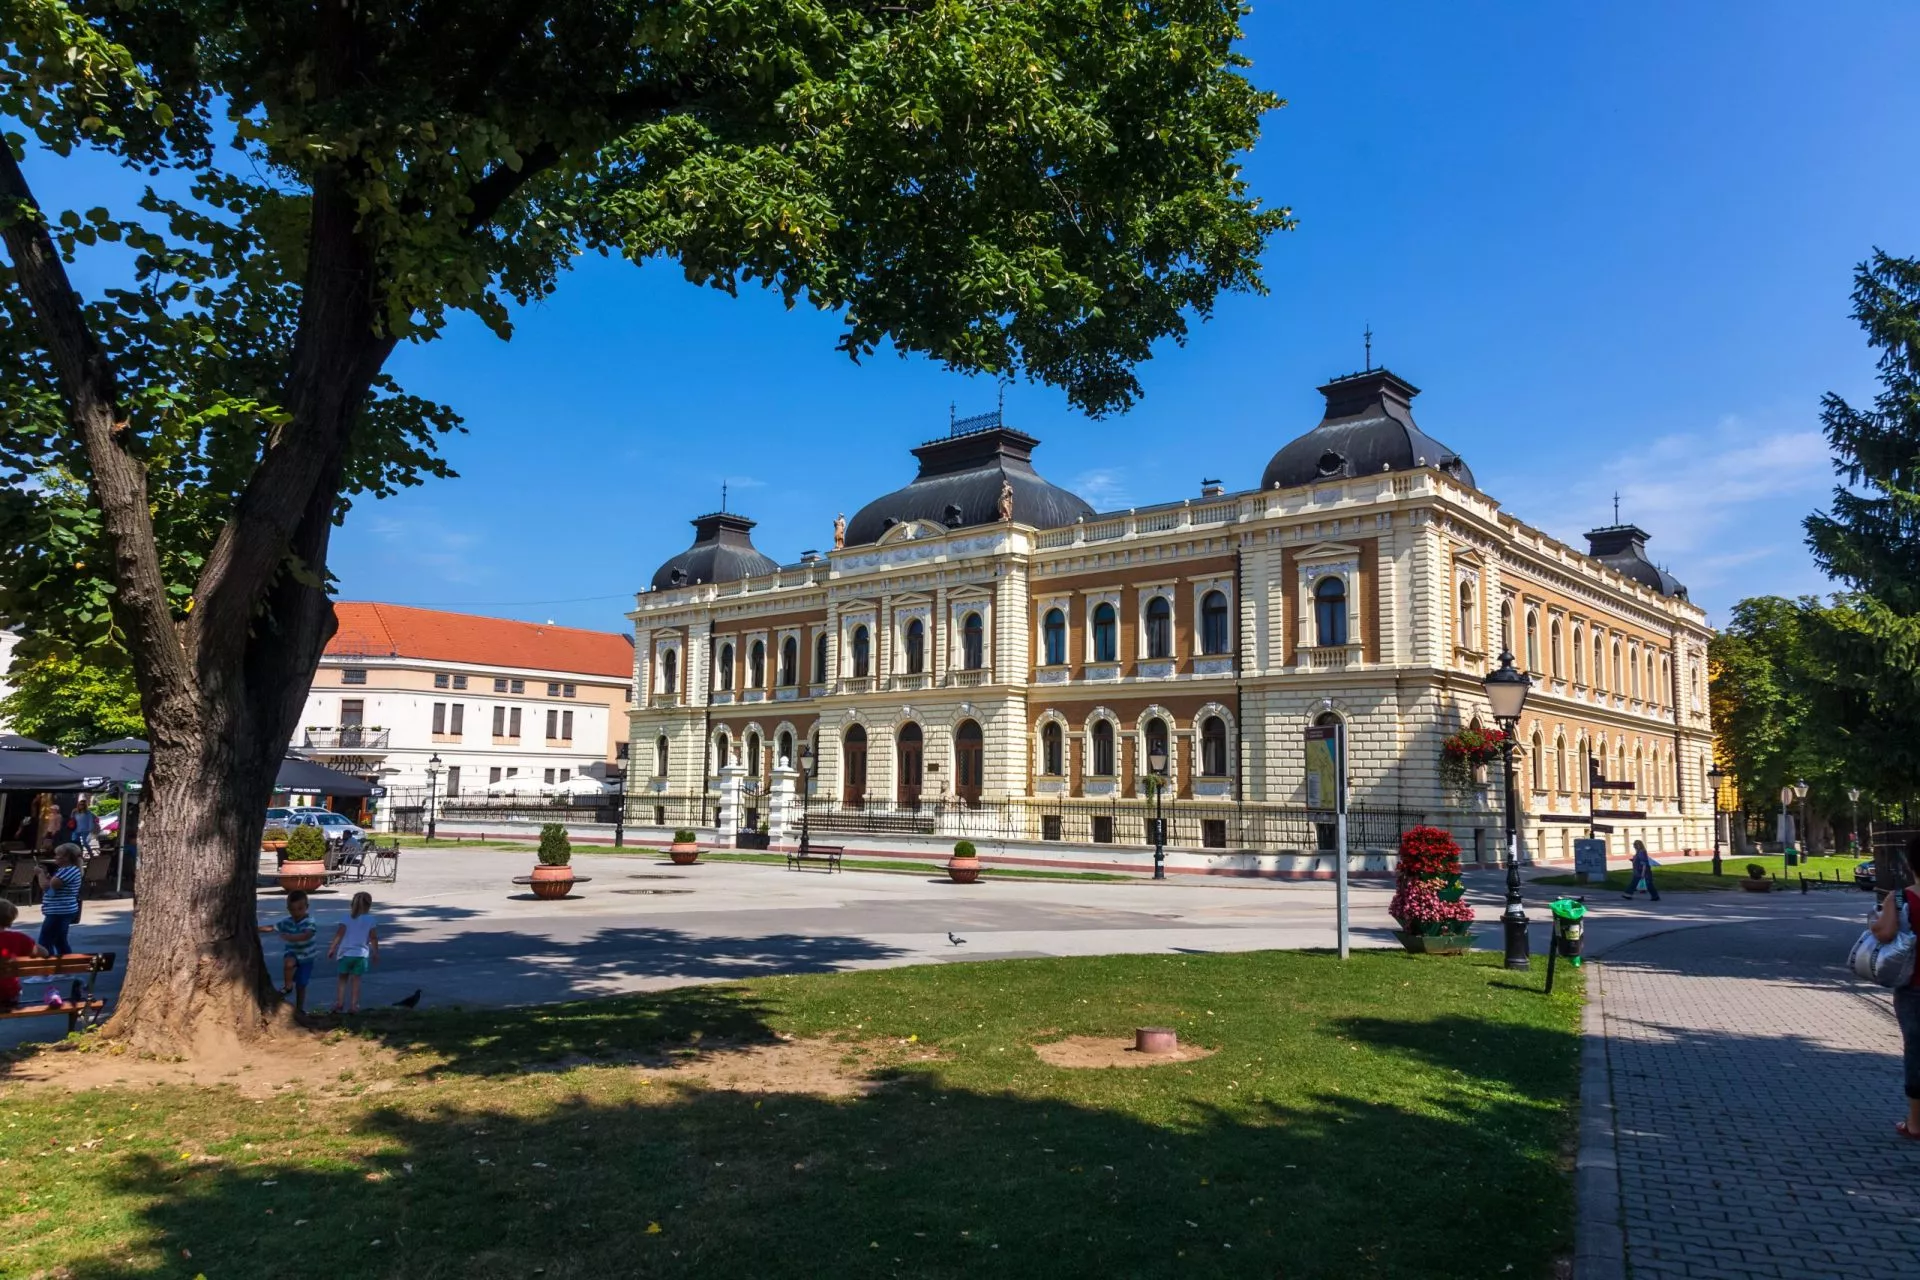 City center, Sremski Karlovci, Serbia